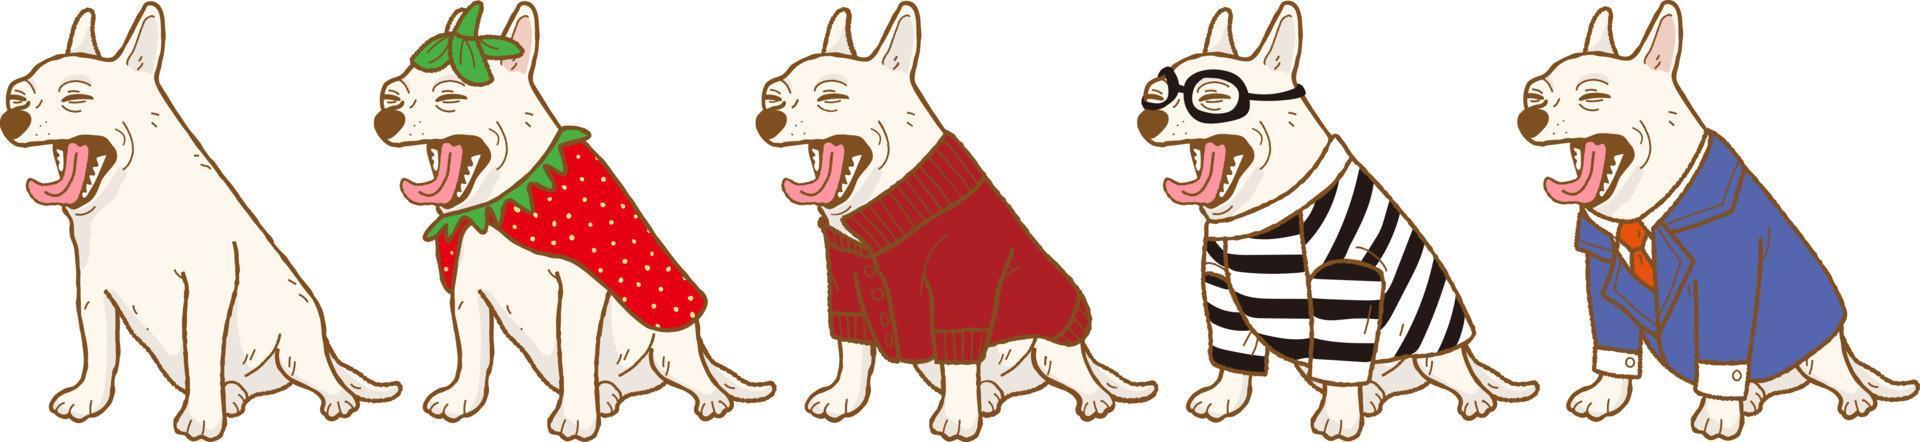 tecknad chihuahua hund med kostym illustration vektor set